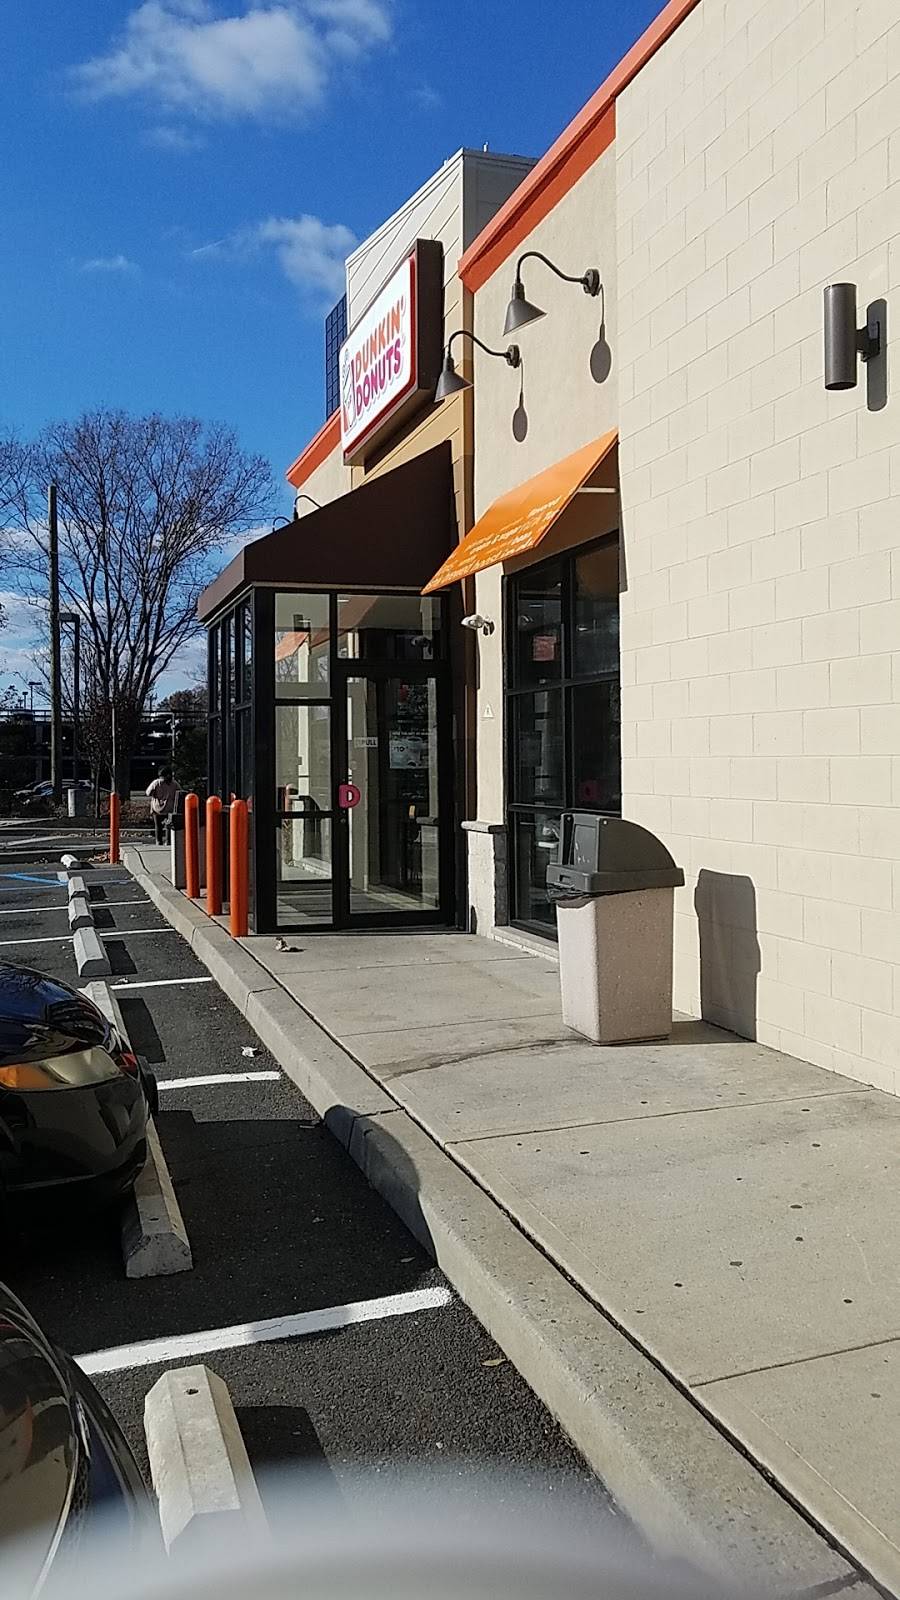 Dunkin Donuts | cafe | 255 Pehle Ave, Saddle Brook, NJ 07663, USA | 2018435500 OR +1 201-843-5500